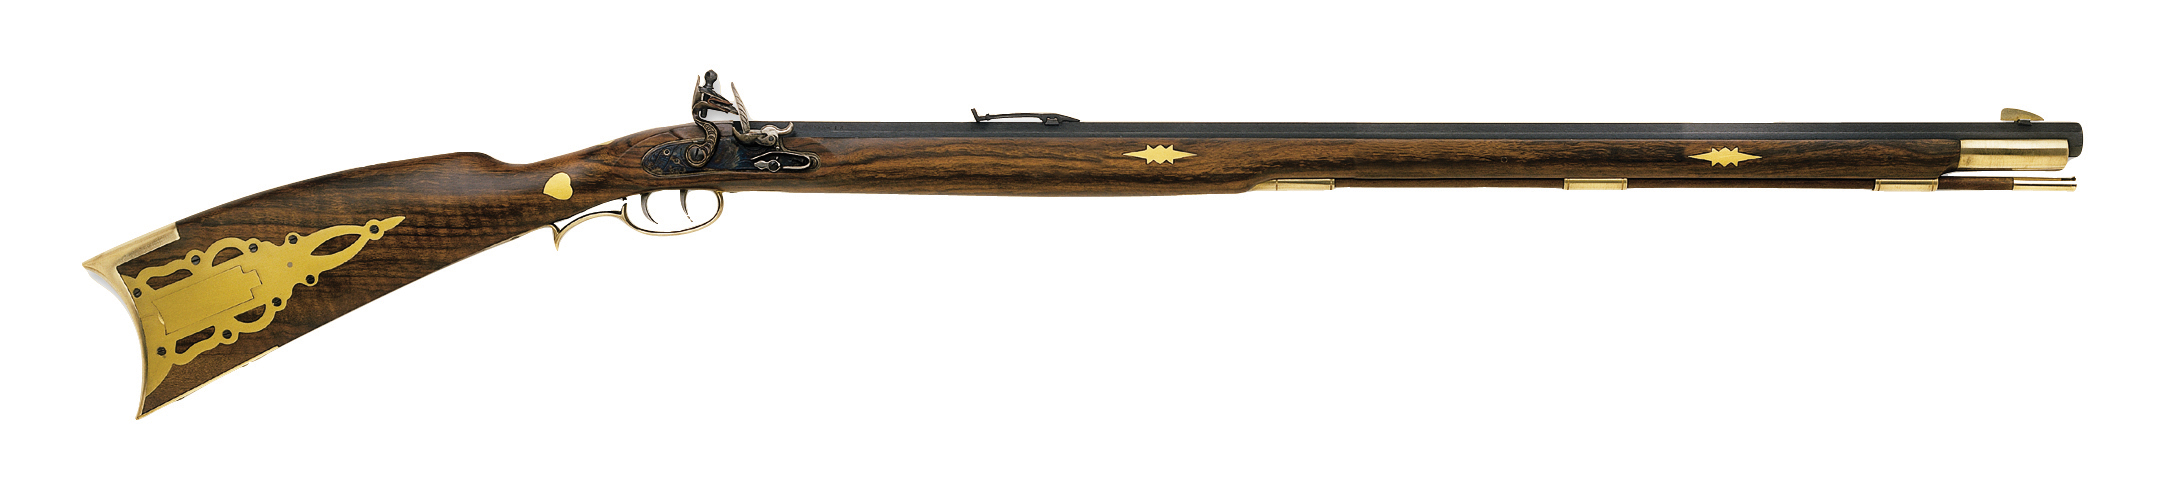 Traditions Pennsylvania Rifle Flintlock